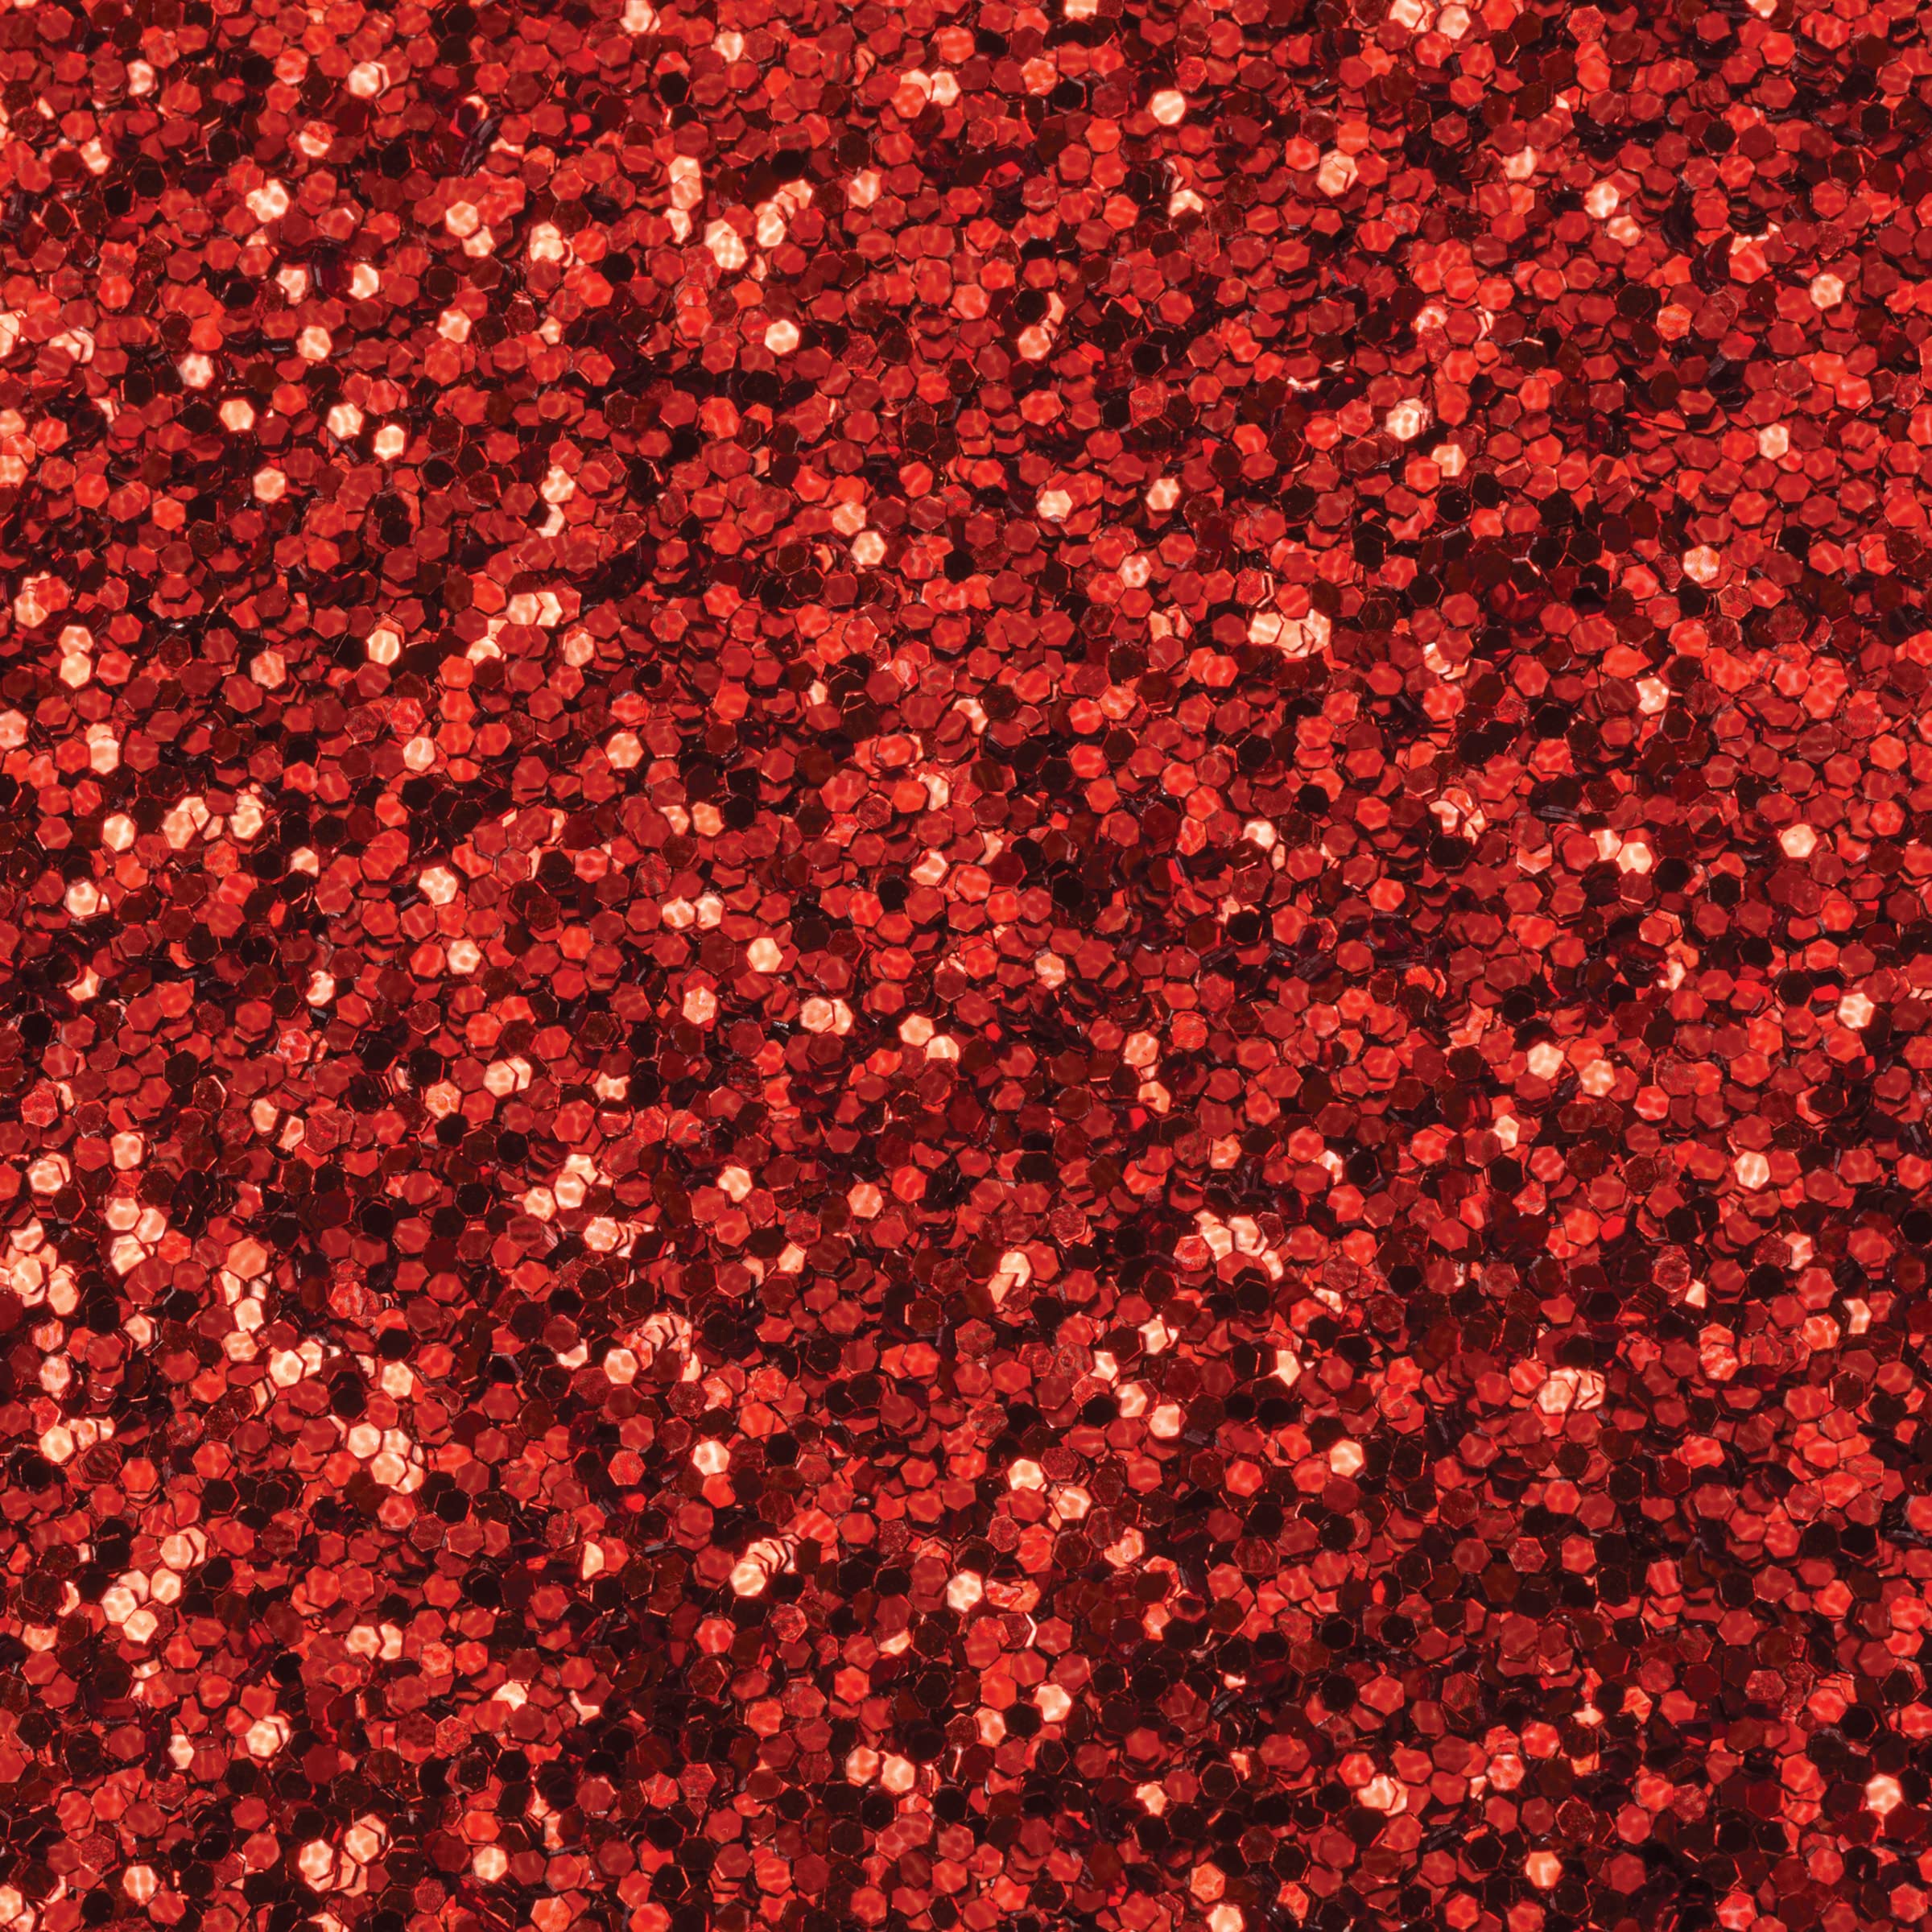 Spectra Arts & Crafts Glitter, Red, 4 oz., 1 Jar